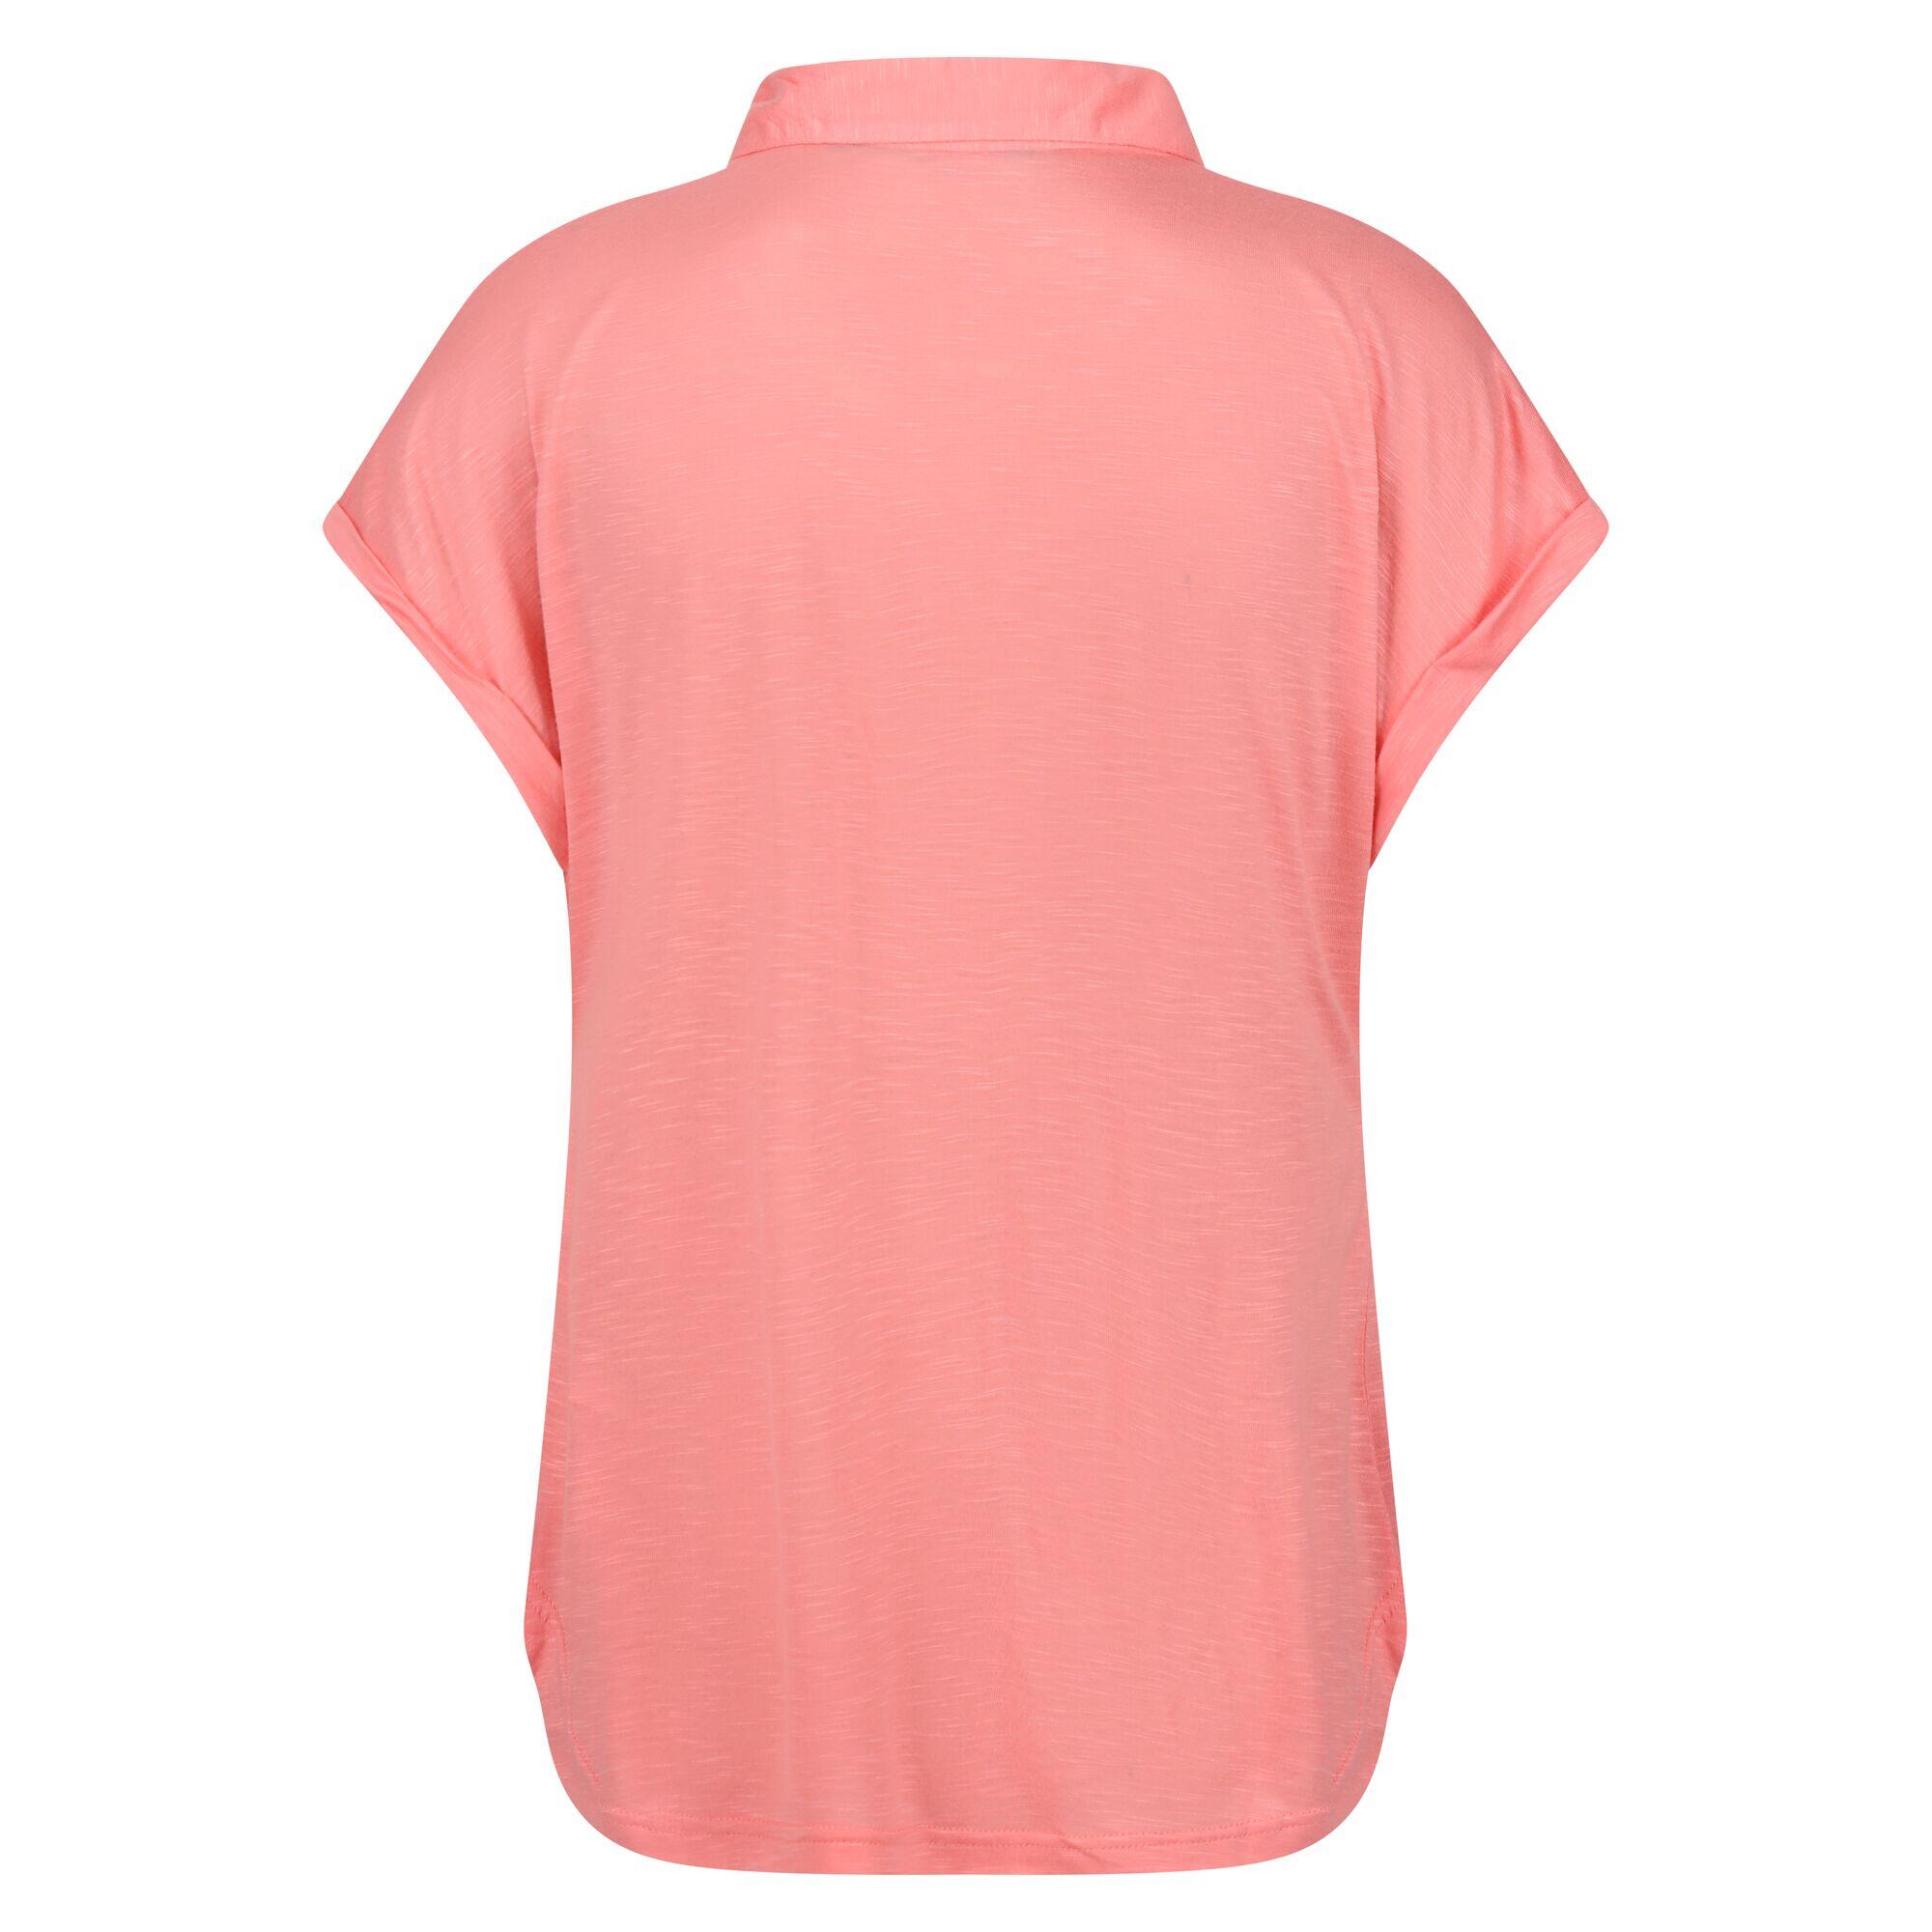 Womens/Ladies Lupine Collared TShirt (Shell Pink) 4/5